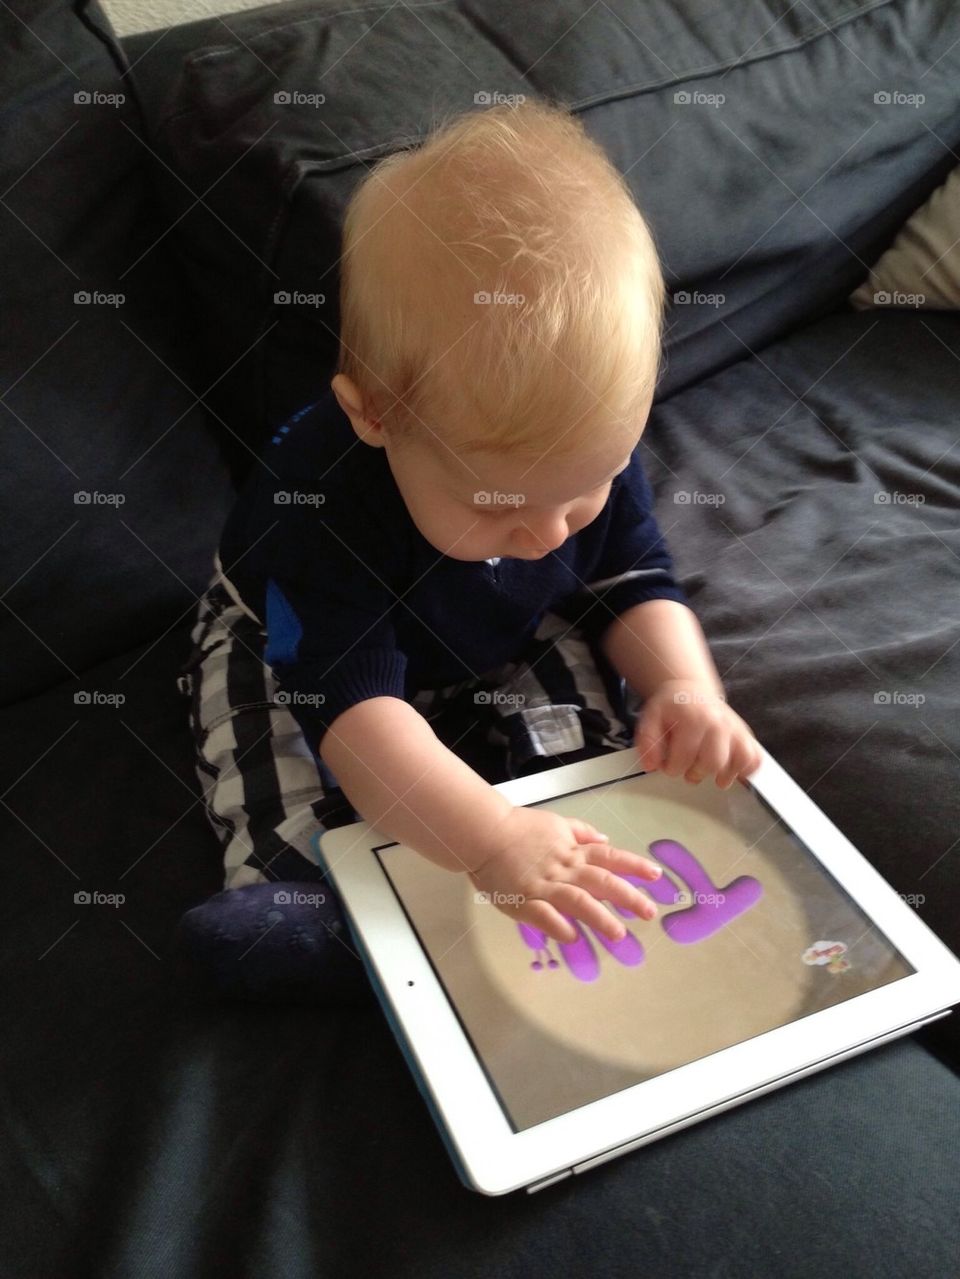 iPadgeneration